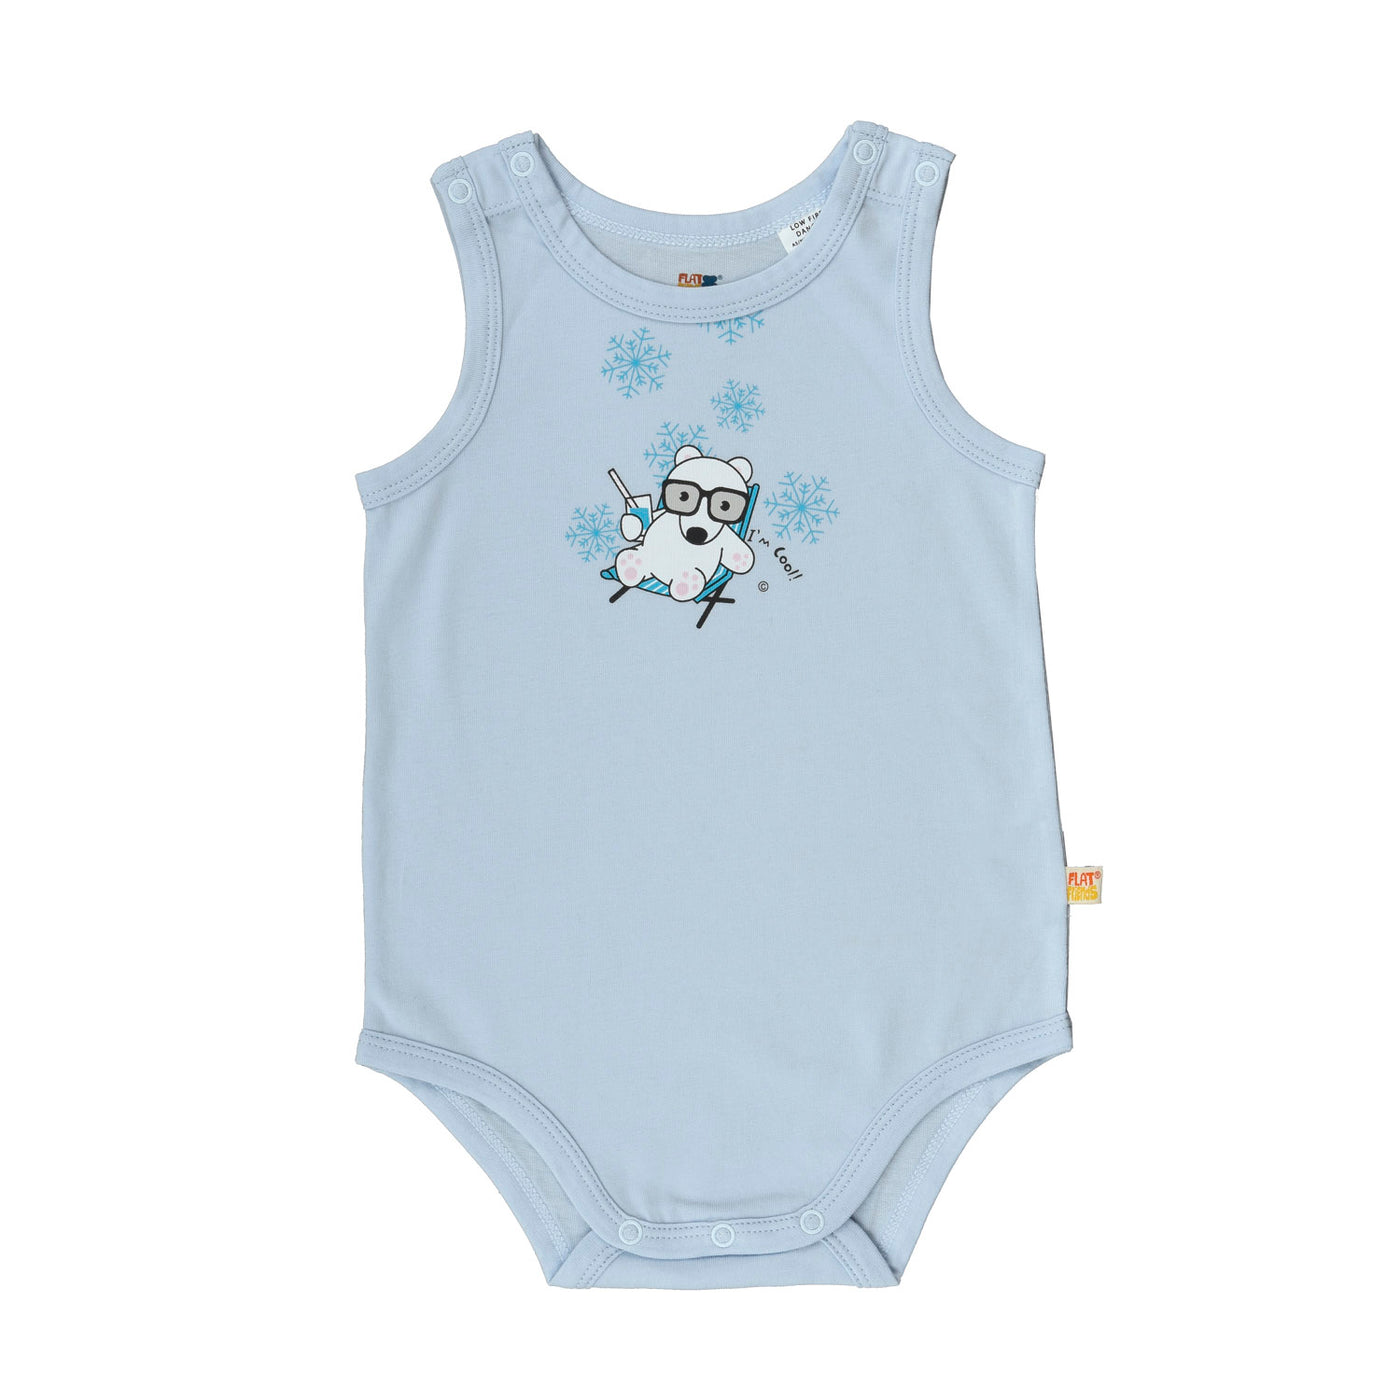 Singlet Baby Jump Suit - Organic Cotton -Polar Bear